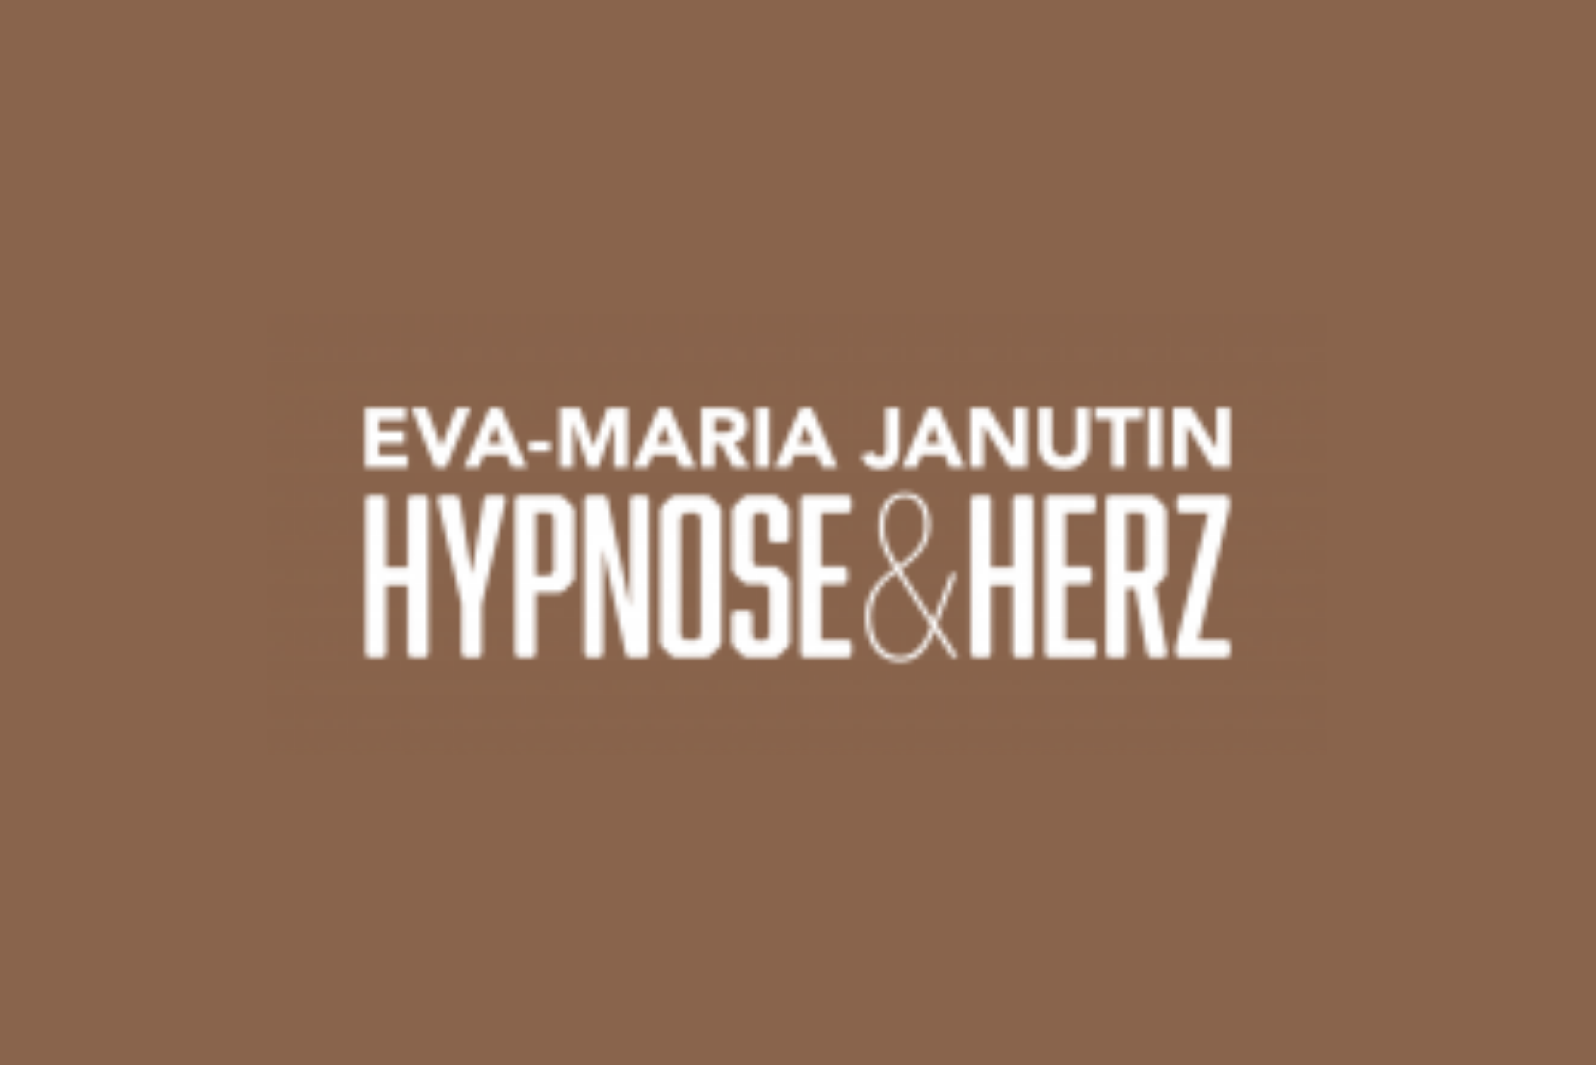 Hypnose & Herz Eva Maria Janutin